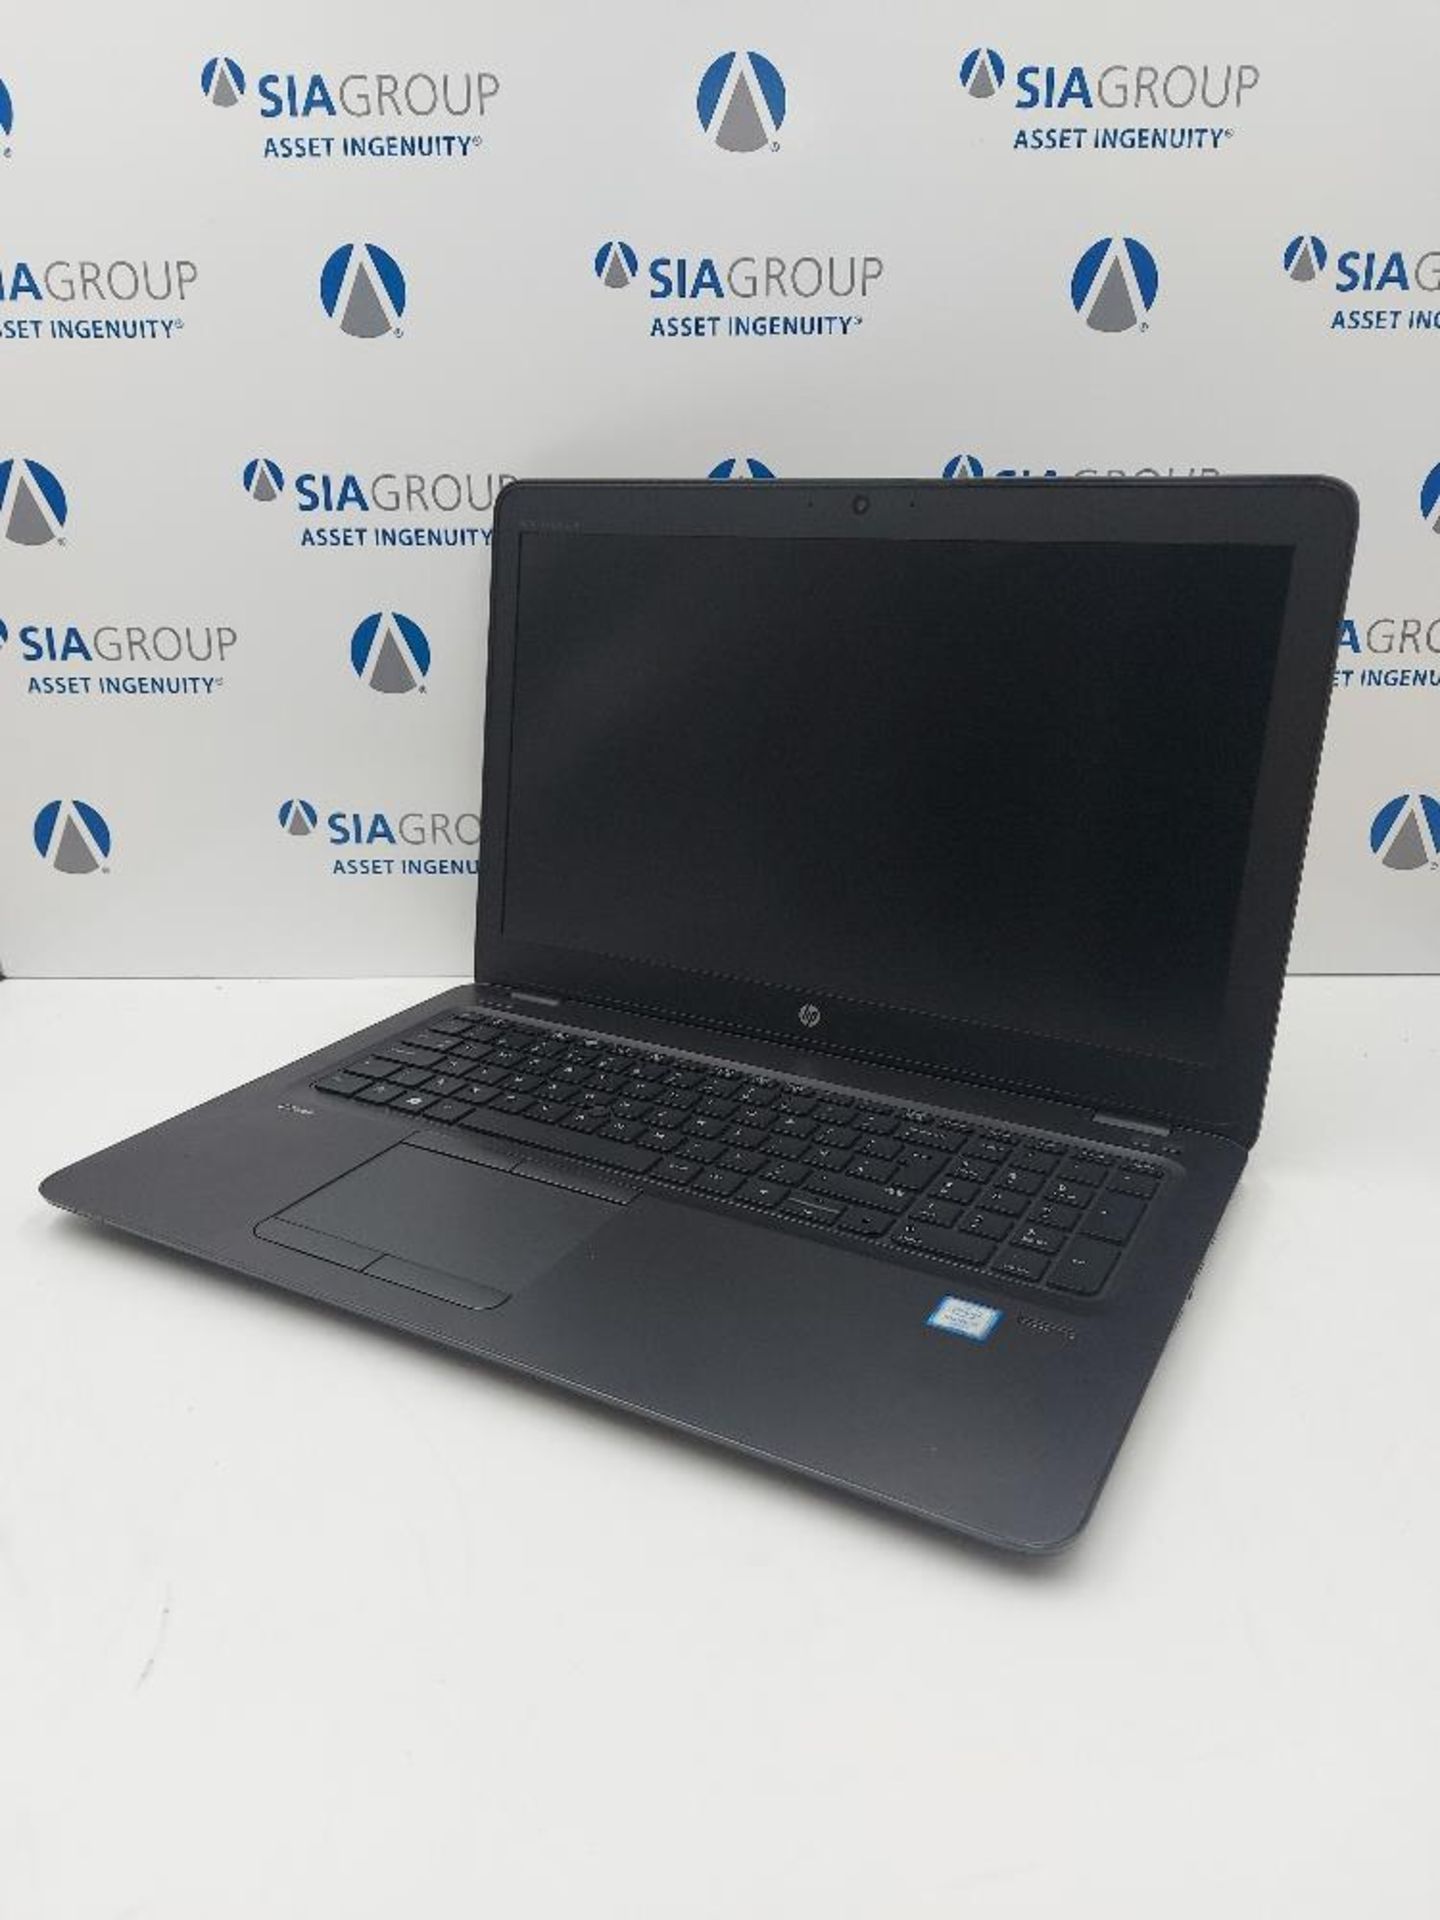 HP Zbook 15u G3 Laptop with Flight Case - Image 2 of 8